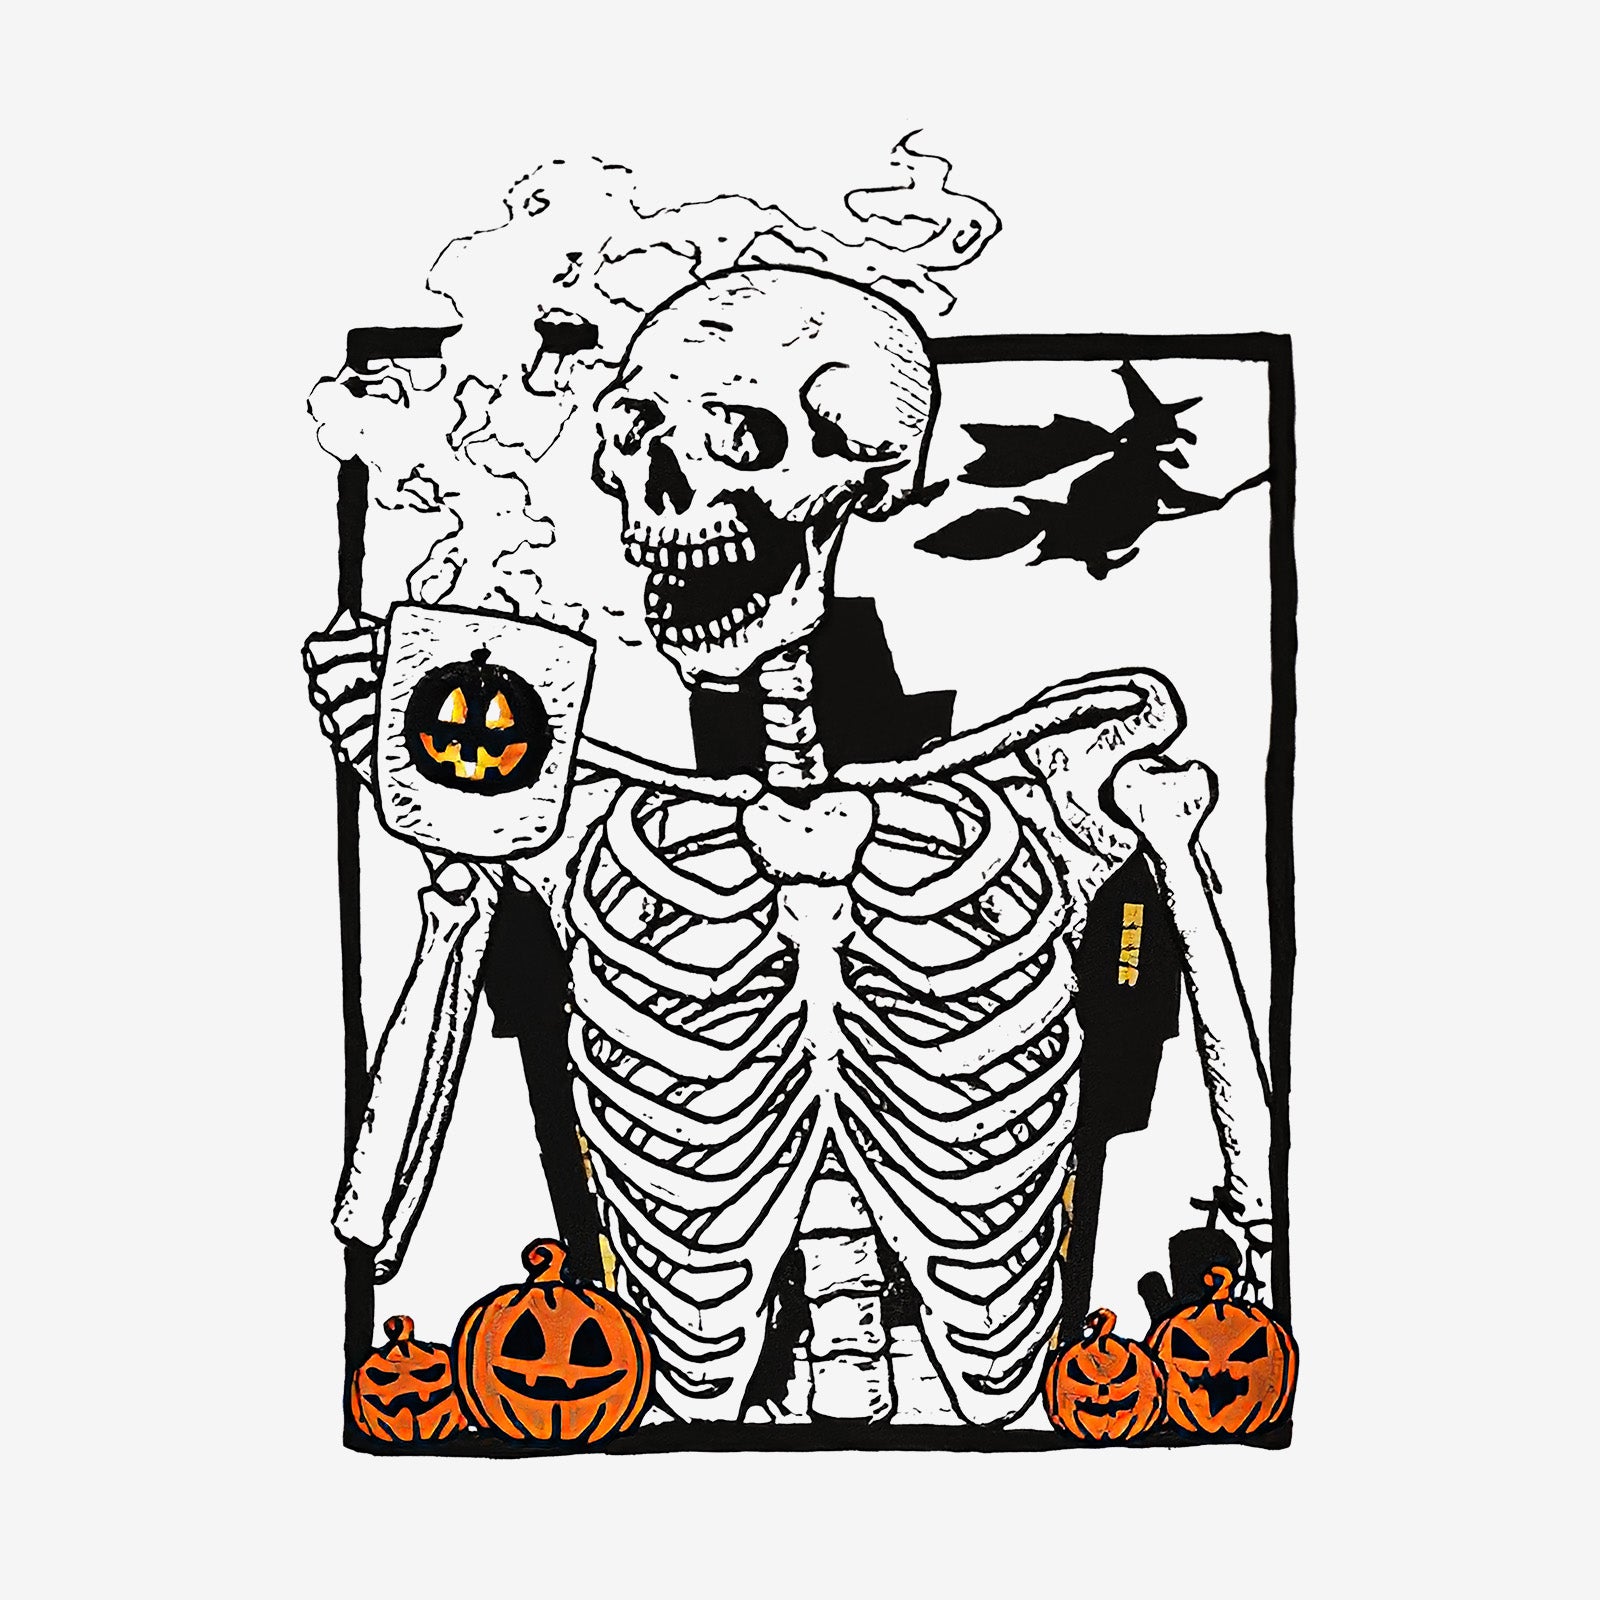 Minnieskull Halloween Pumpkin Skull Print Sweatshirt - chicyea